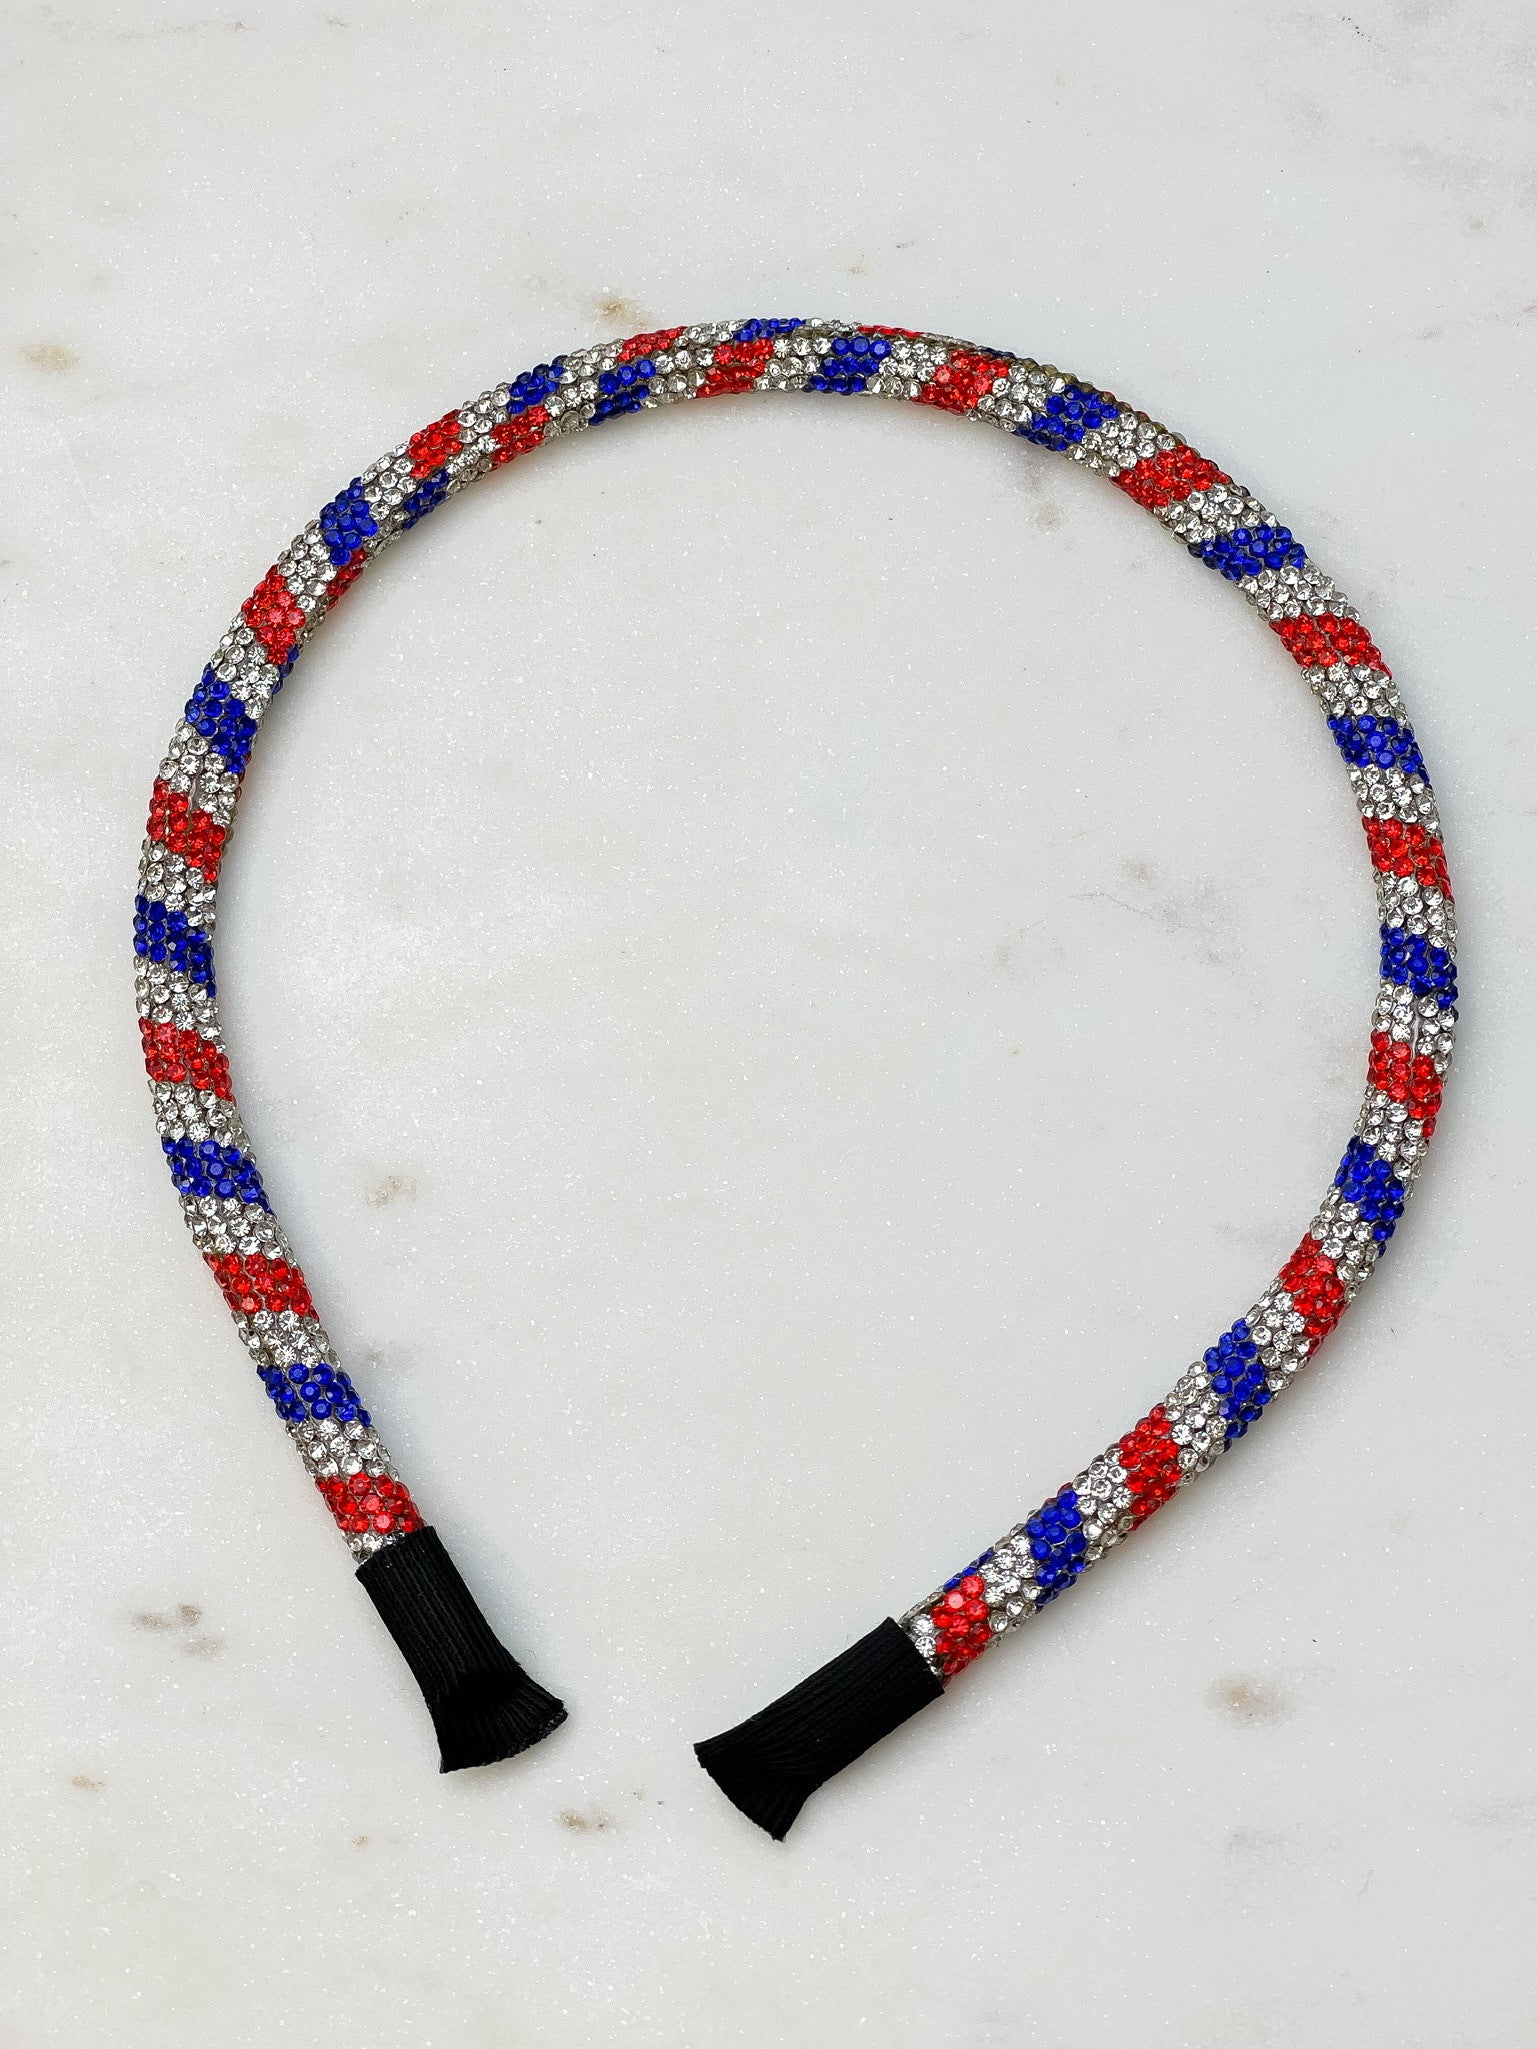 Skinny Rhinestone Headband - Red, White, & Blue